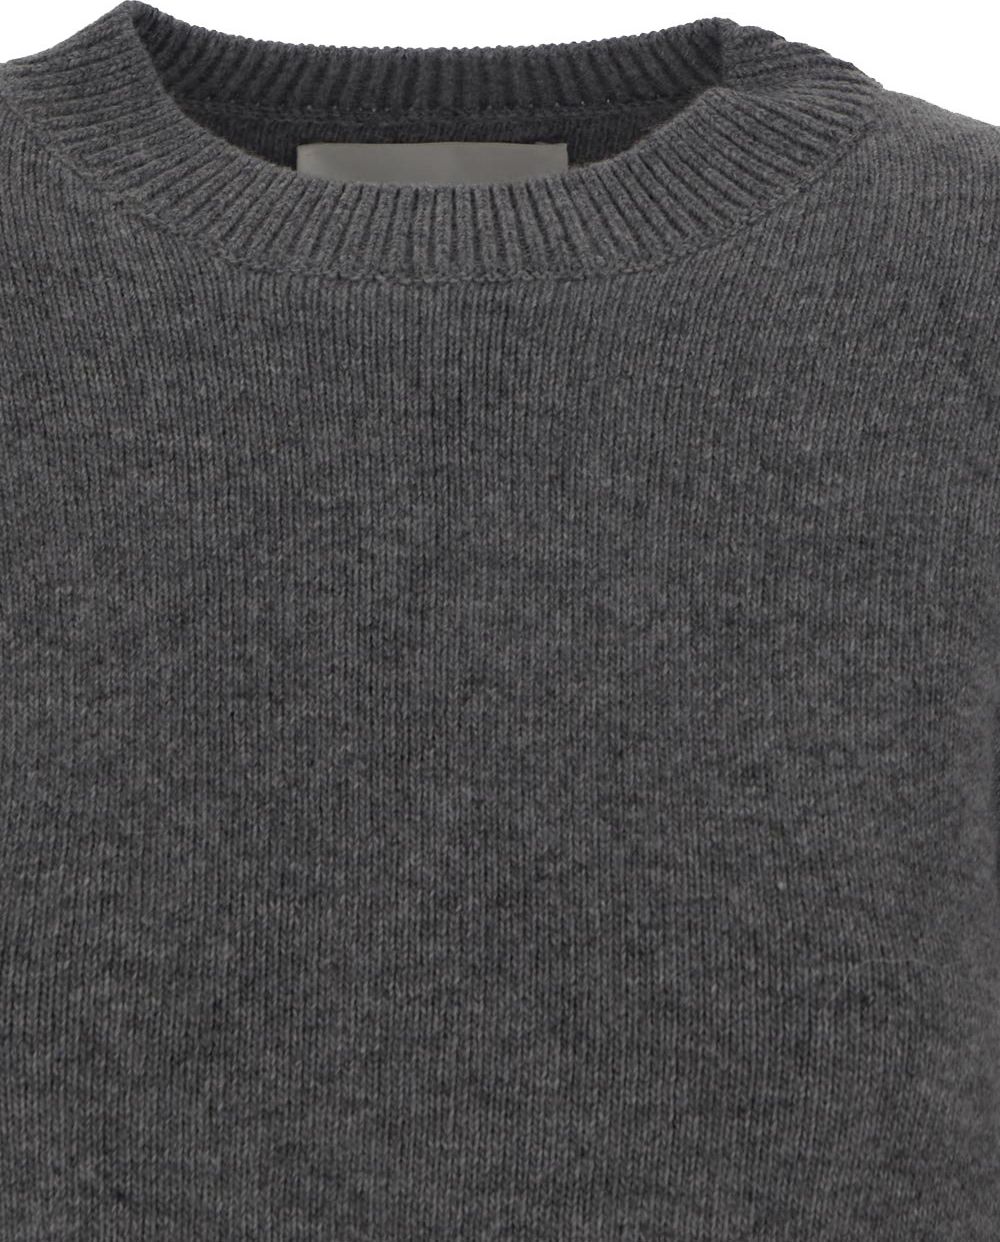 Jil Sander Grey Knit Sweater Grijs